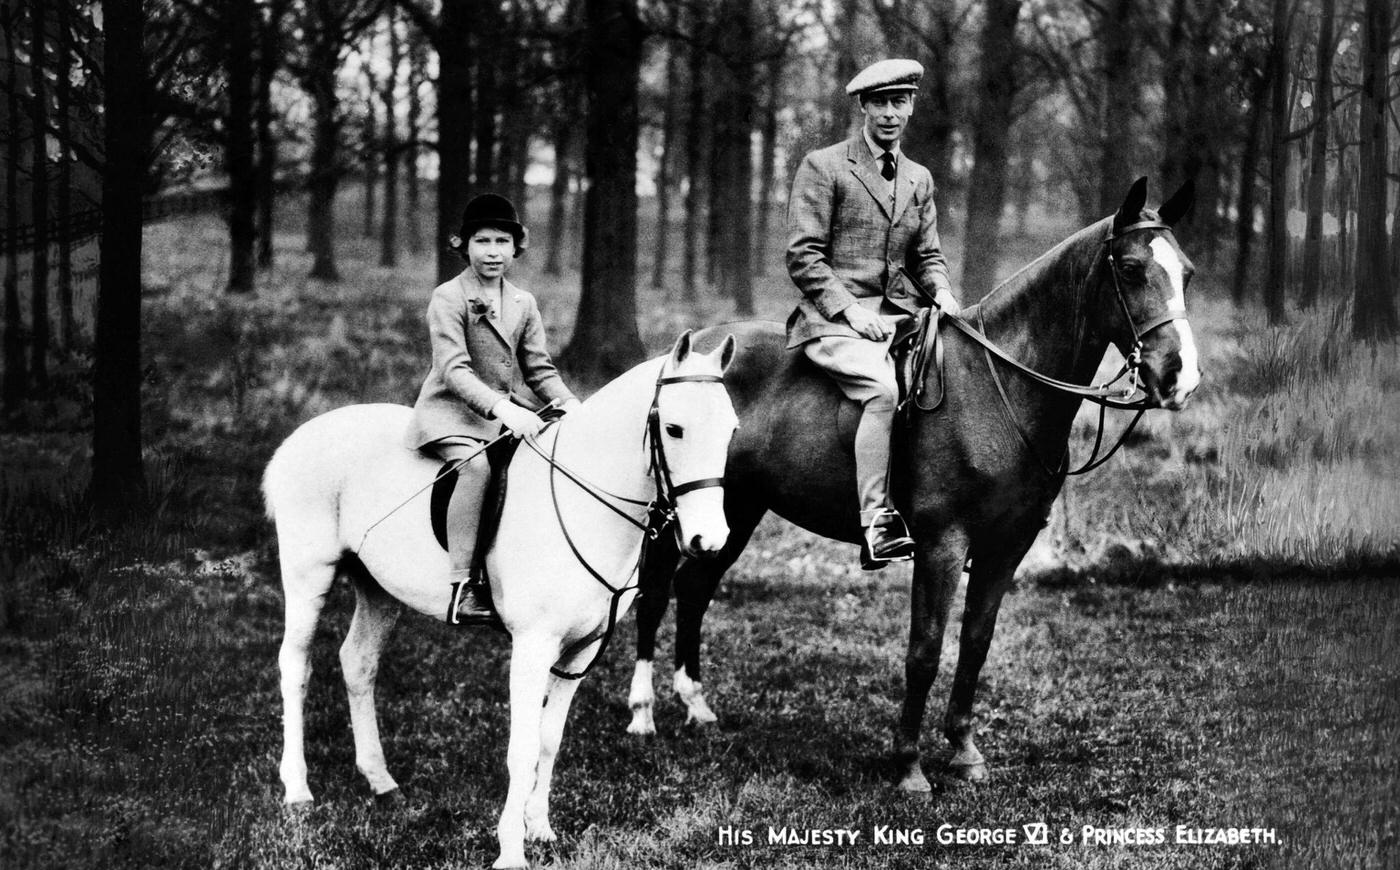 Princess Elizabeth and King George VI on Horseback, circa 1935